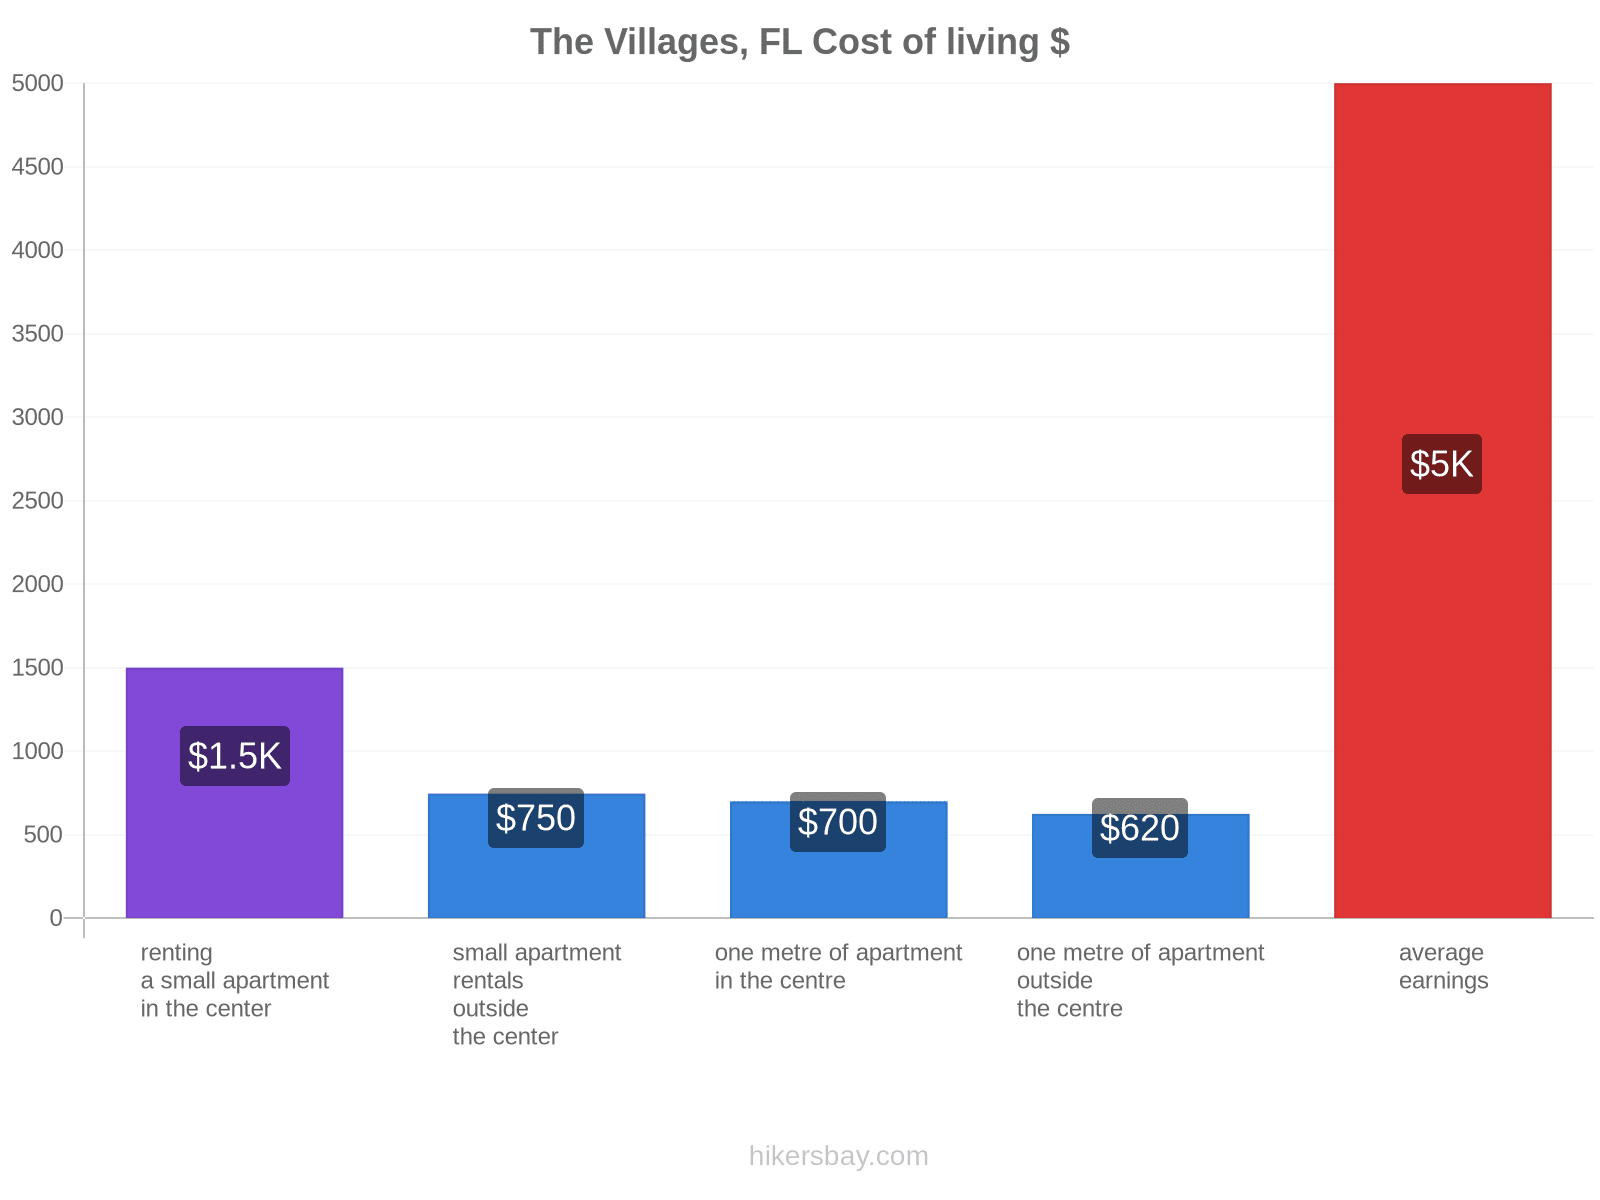 The Villages, FL cost of living hikersbay.com